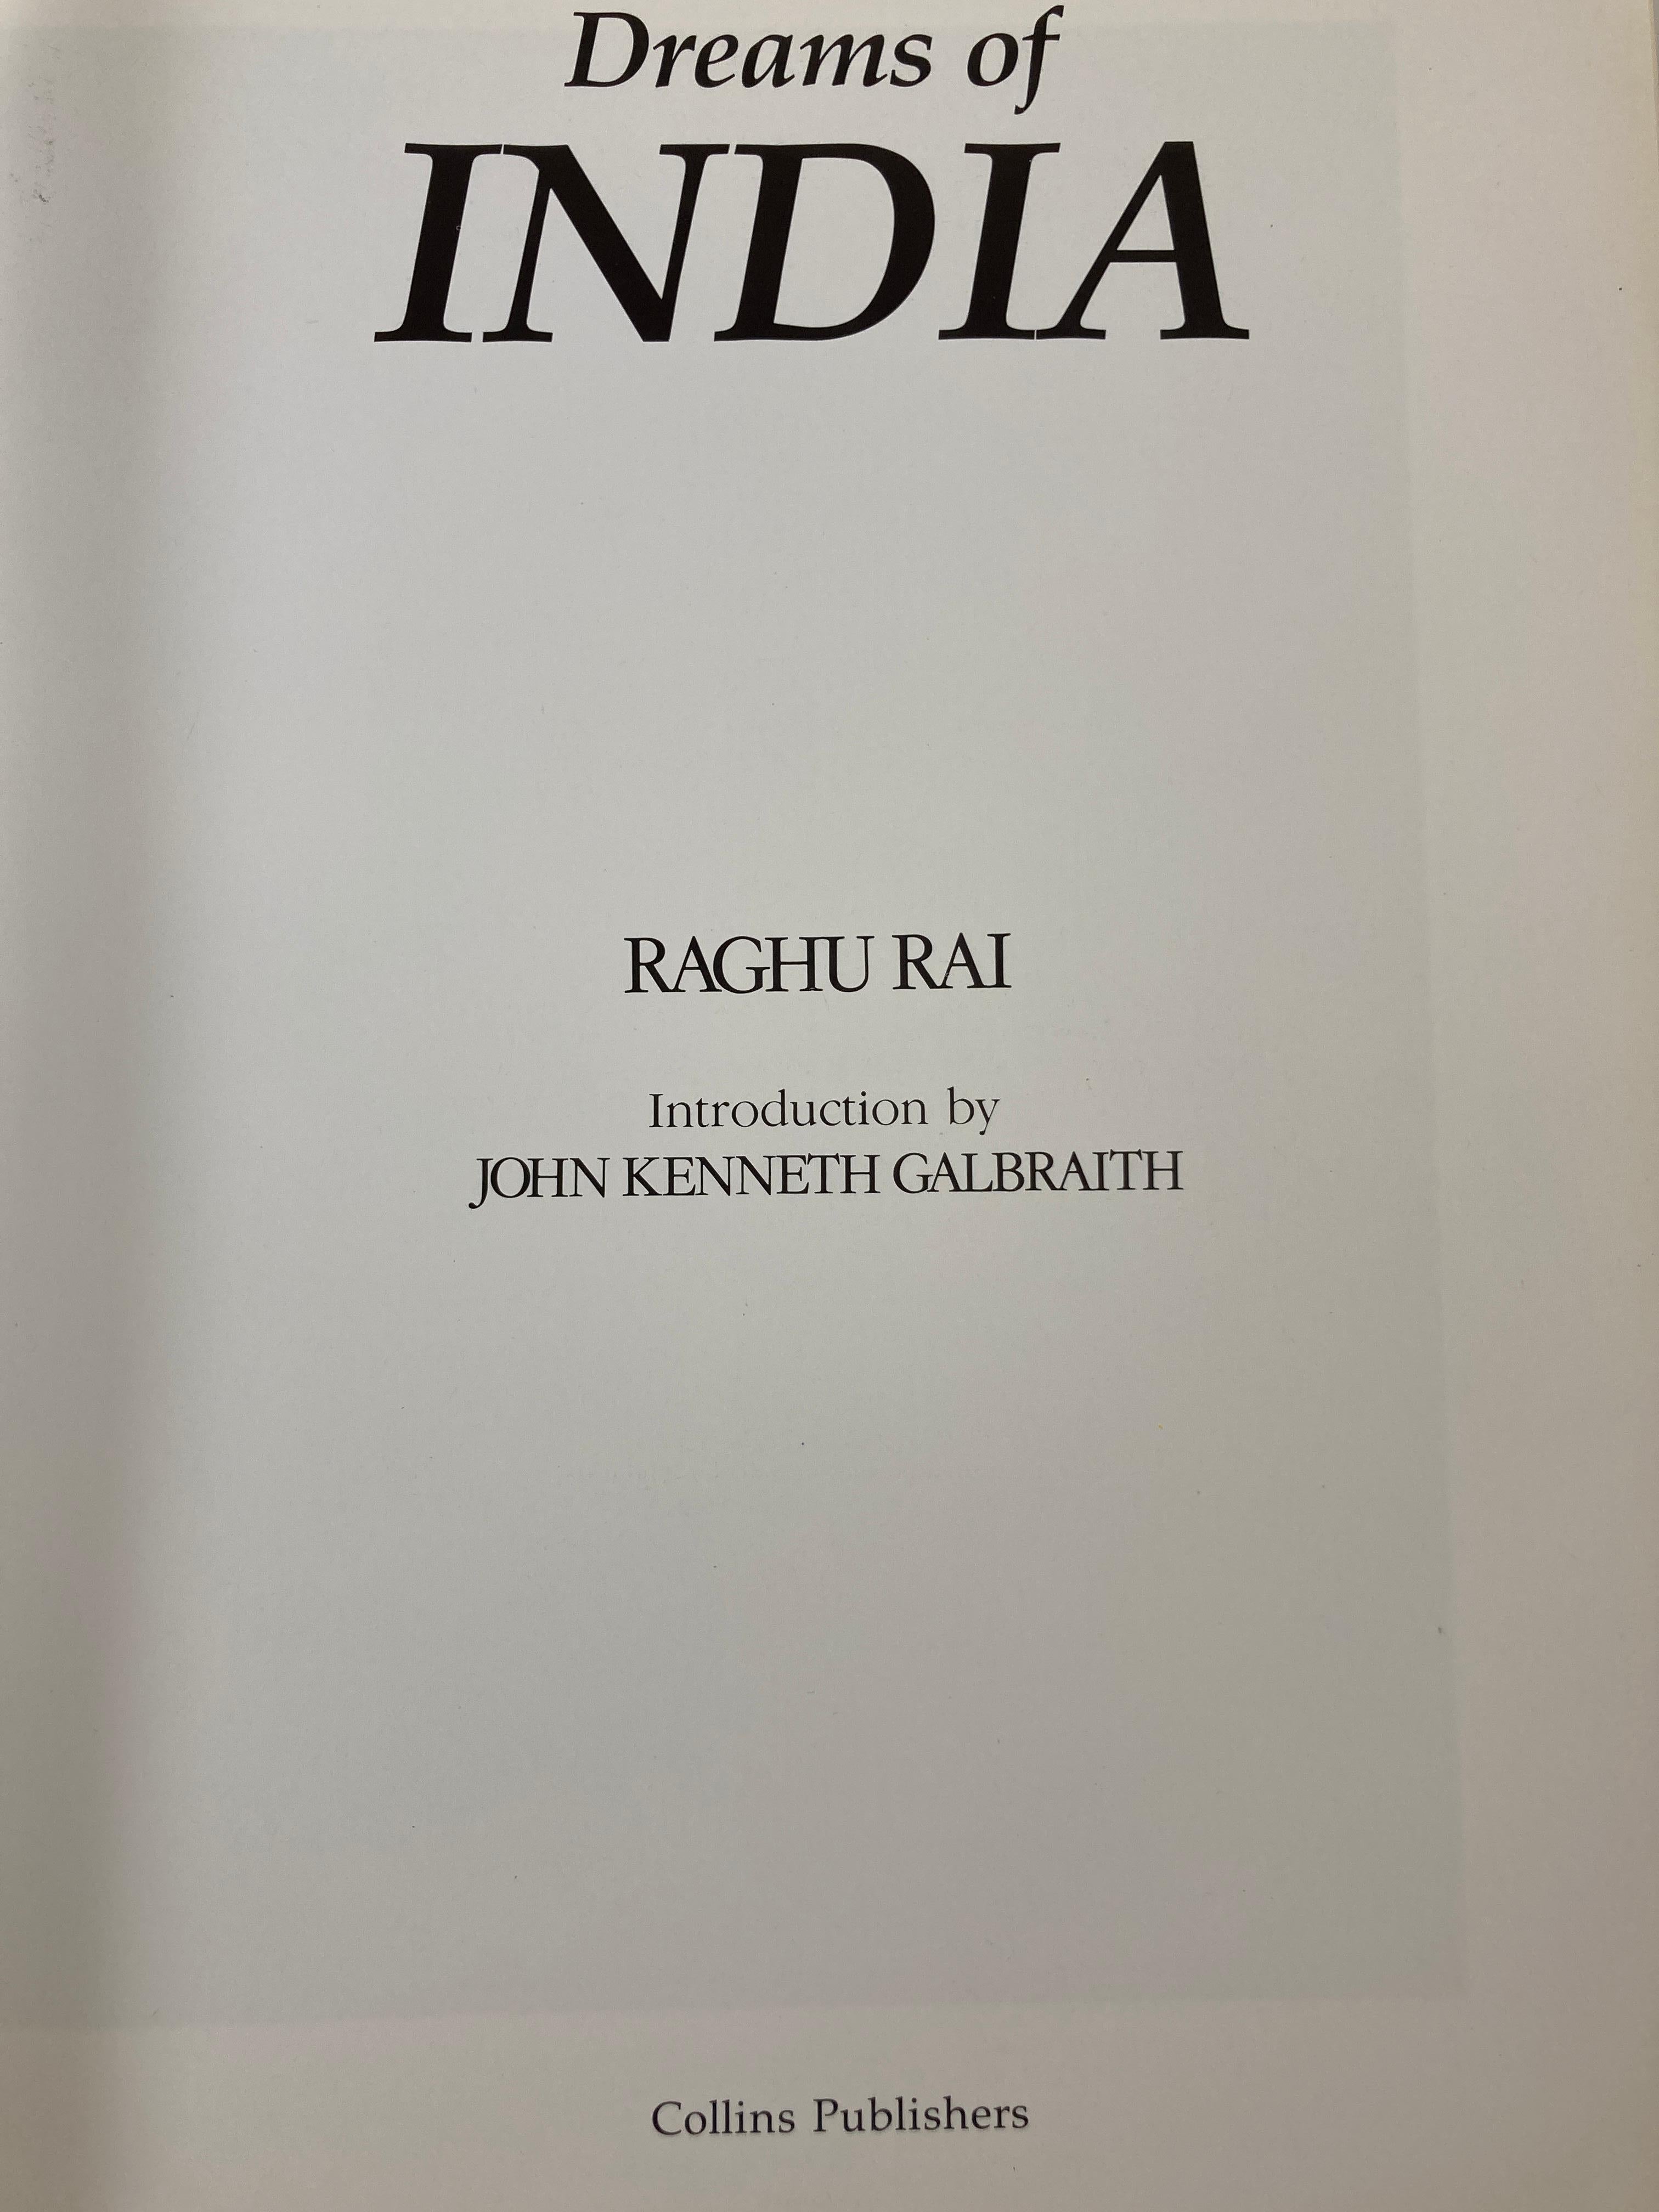 Indian Dreams of India Hardcover Book by Raghu Rai